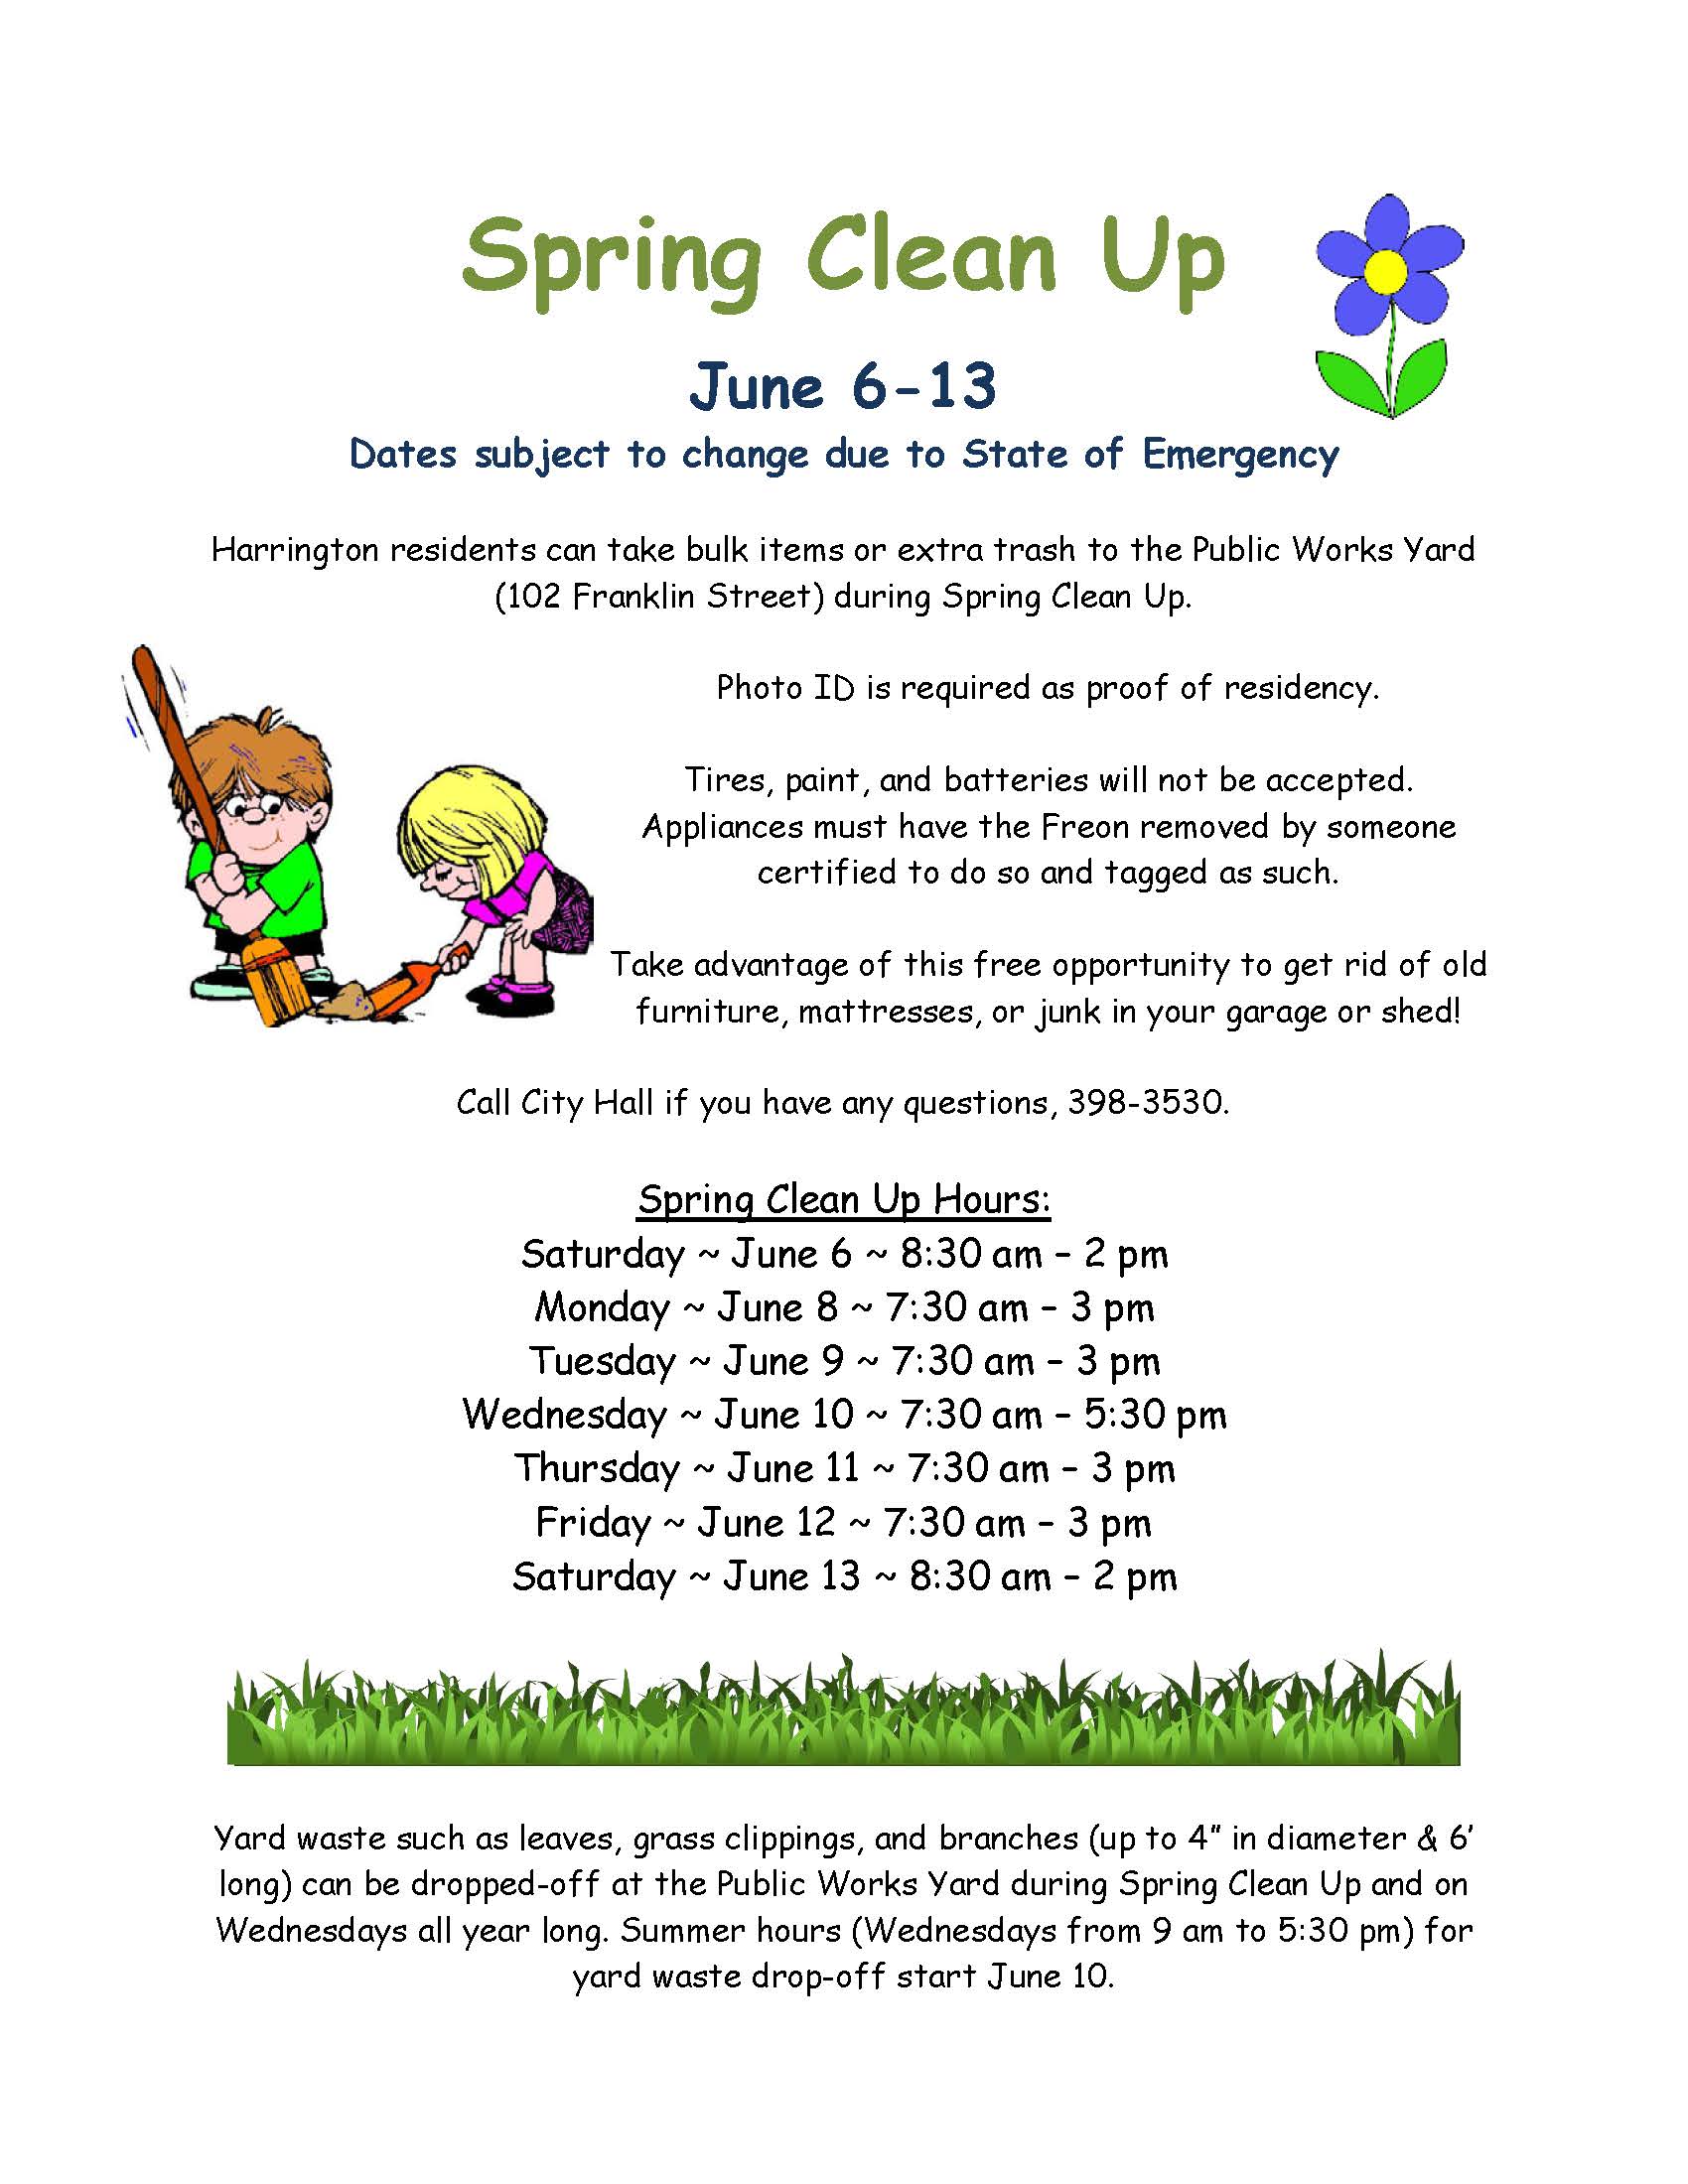 Spring Clean Up Flyer 2020 City of Harrington